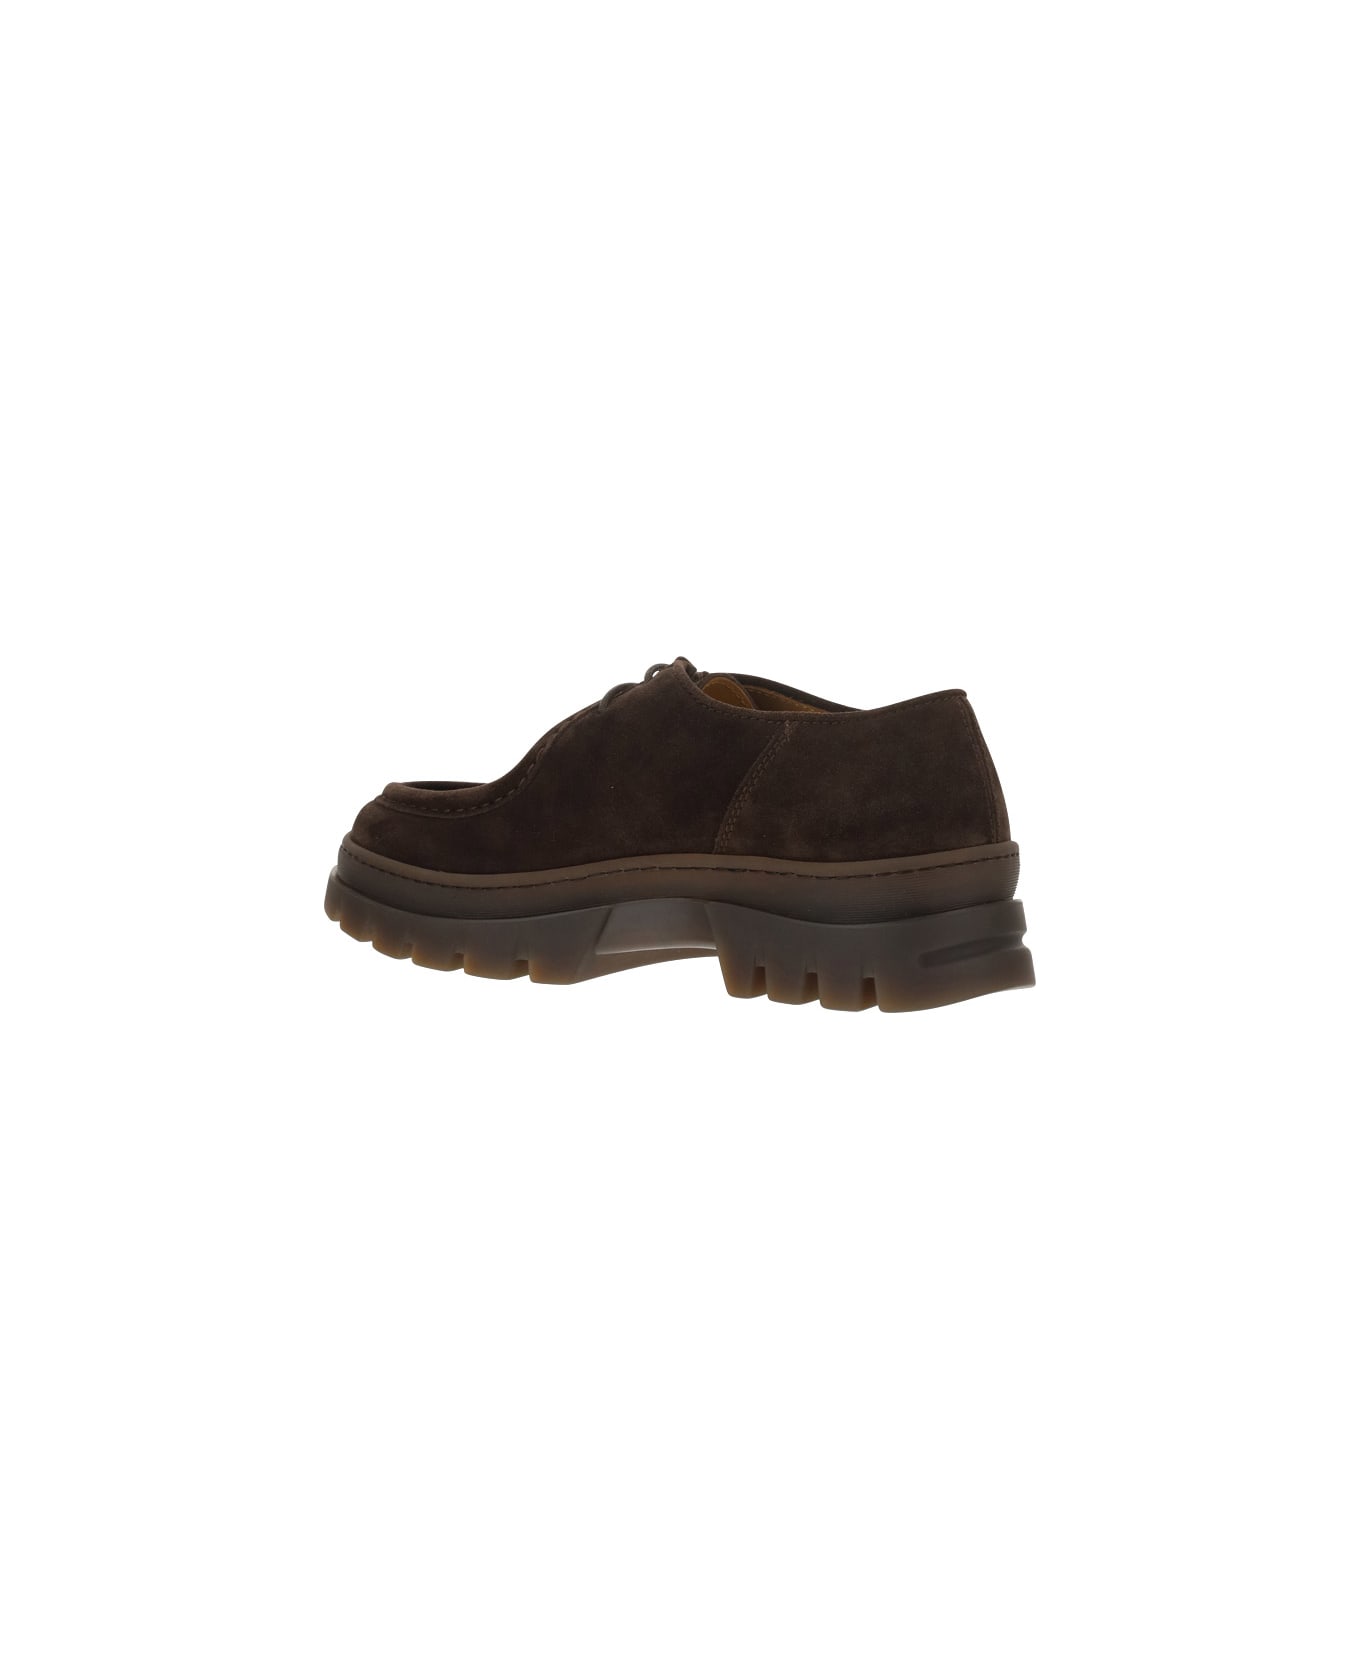 Henderson Baracco Shoes - Klima Brown